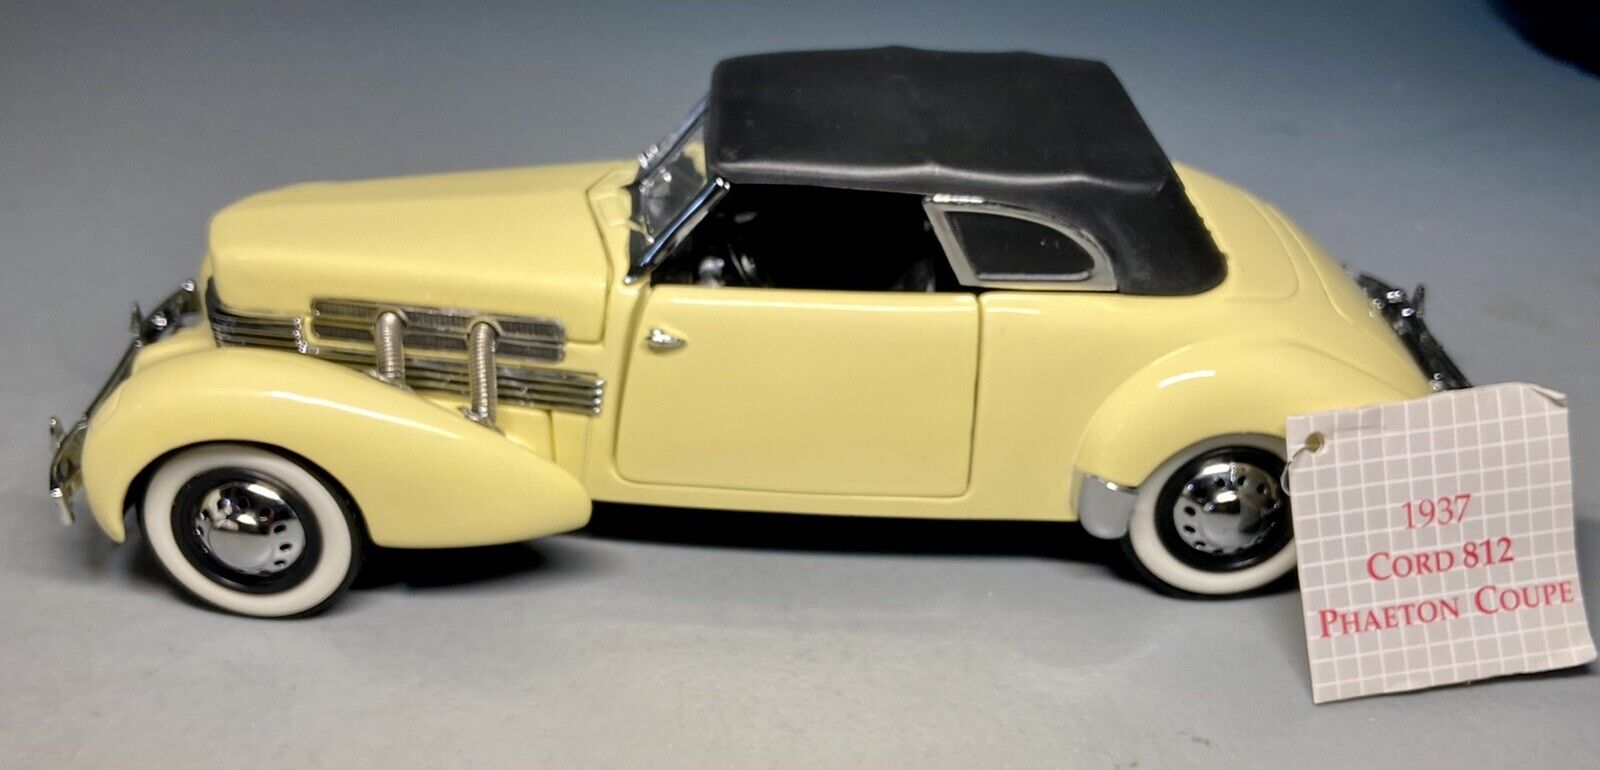 Vtg Franklin Mint Precision Models 1937 Cord￼ 812 Phaeton Coupe 1:24  Diecast Car